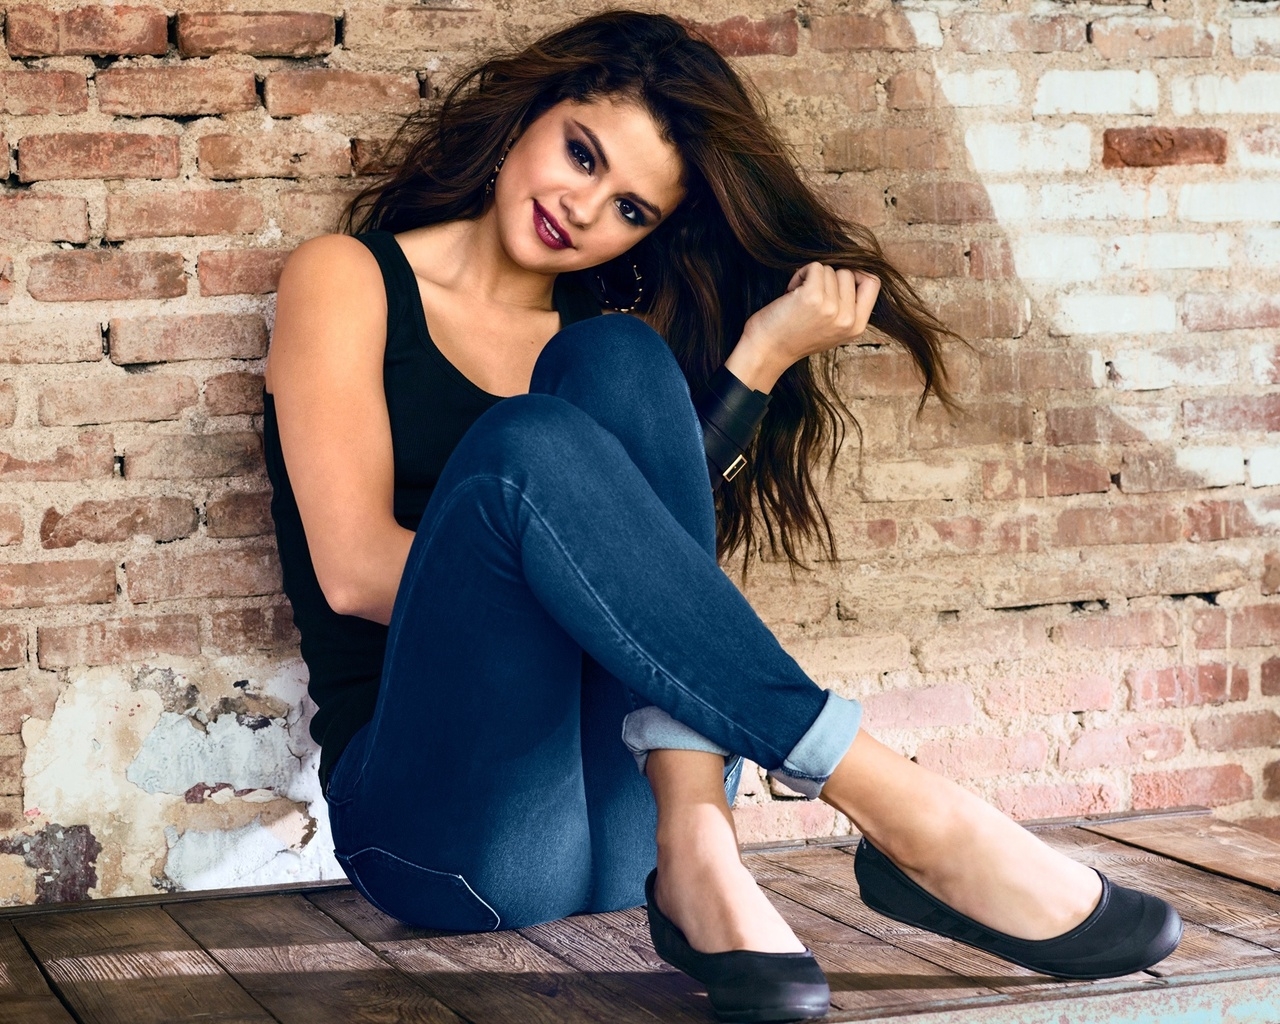 Selena Gomez Smile for 1280 x 1024 resolution